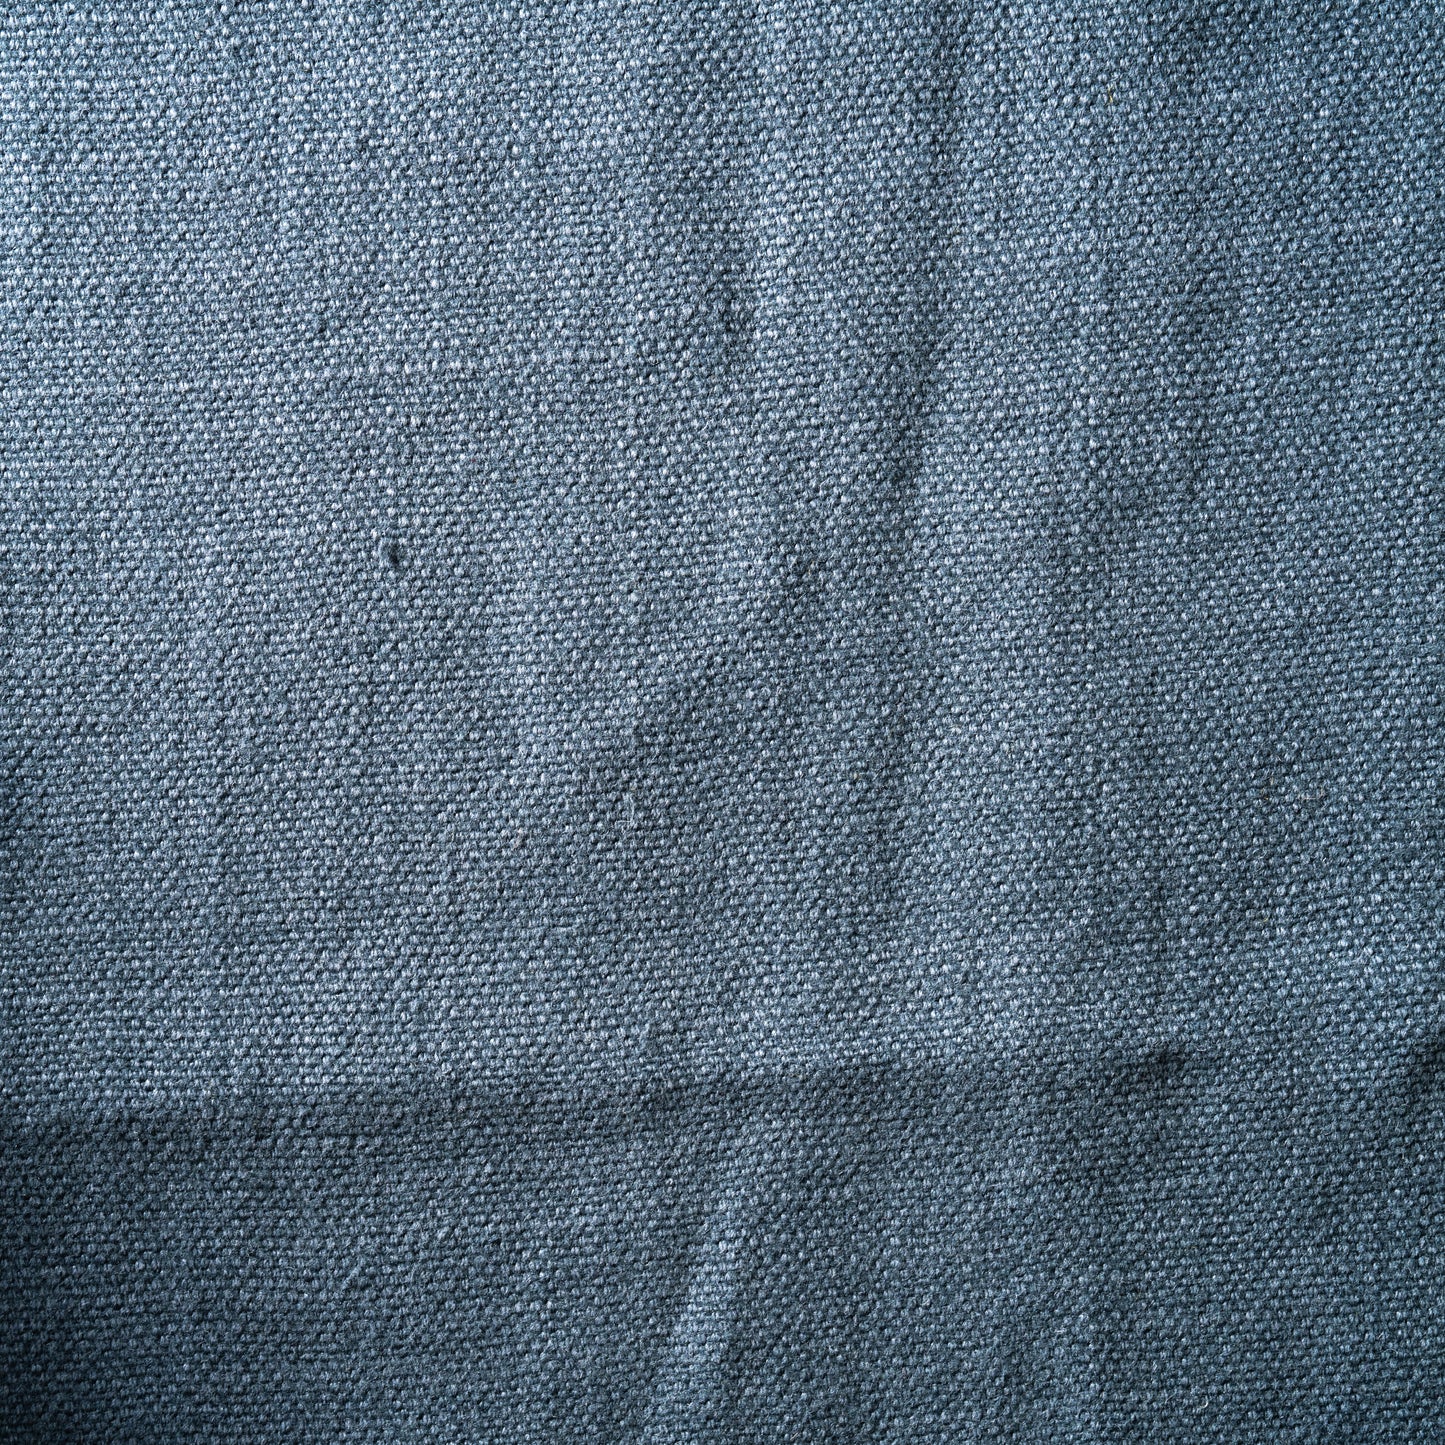 14.3 oz/sq yard 100% Upholstery/ Slipcover Weight Linen in Bondi Blue